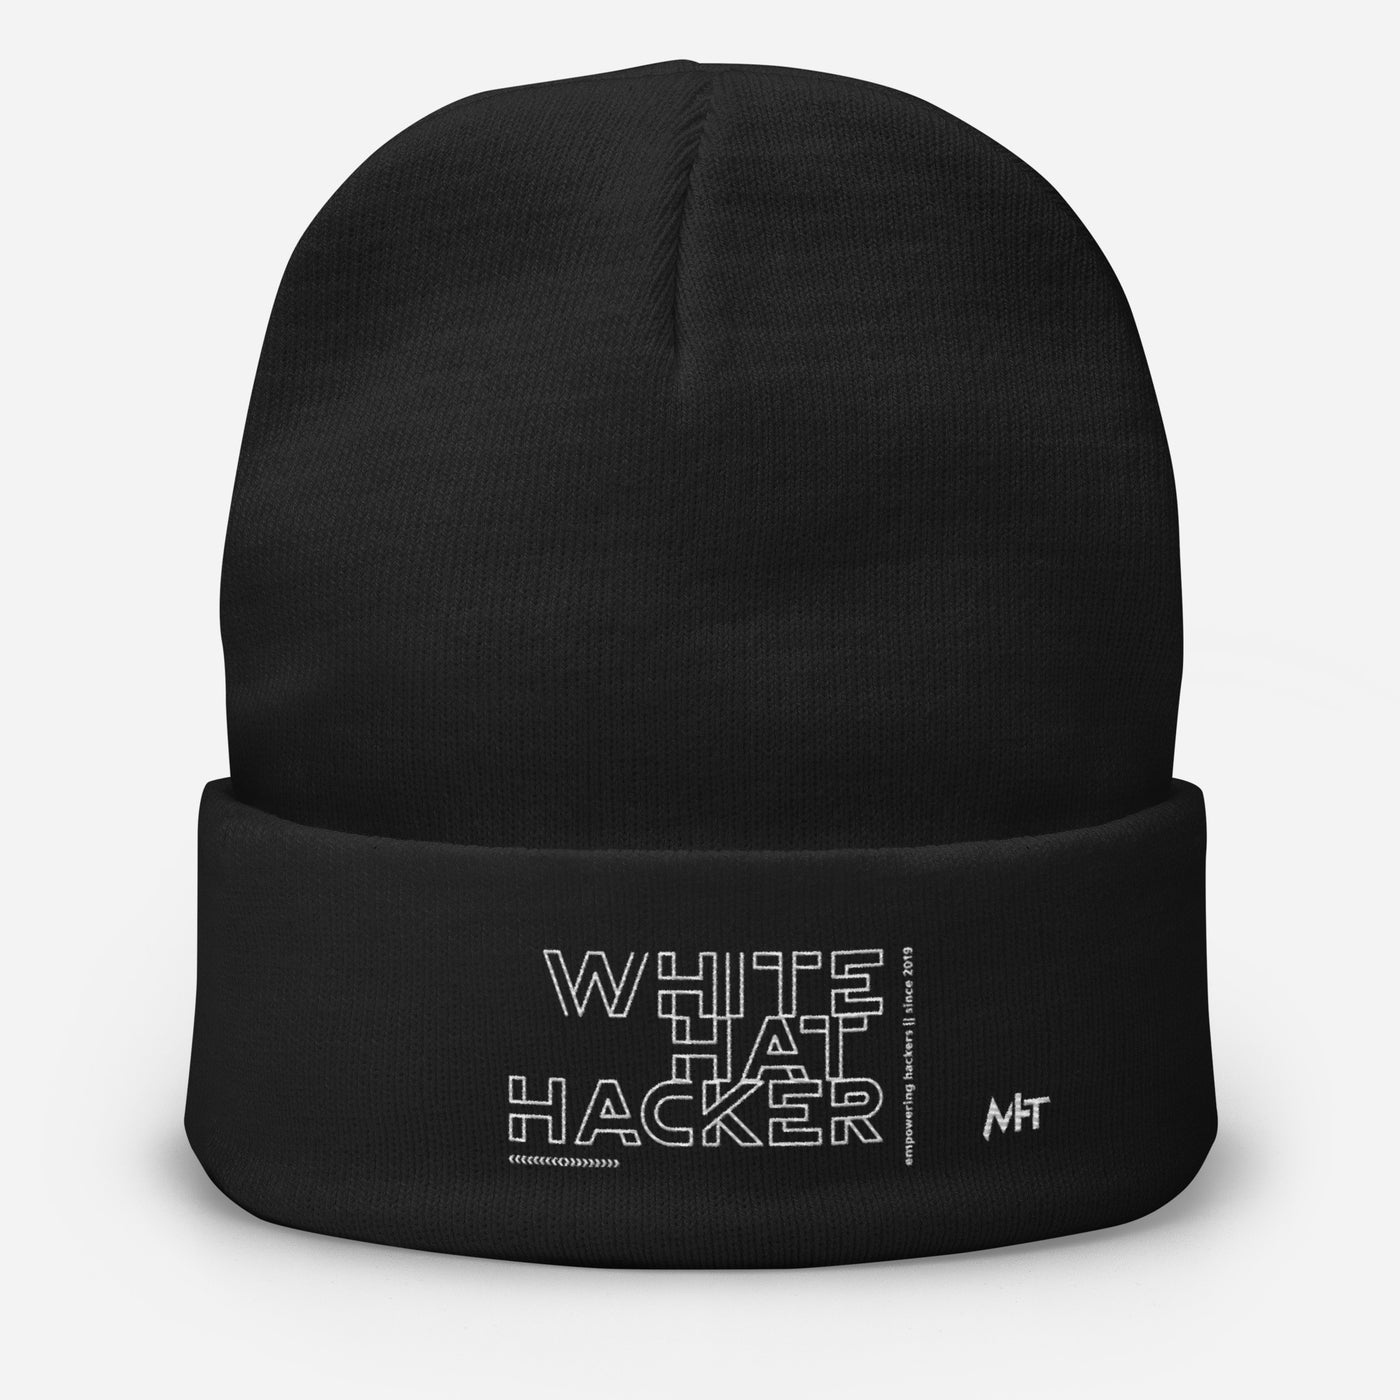 White Hat Hacker - Embroidered Beanie